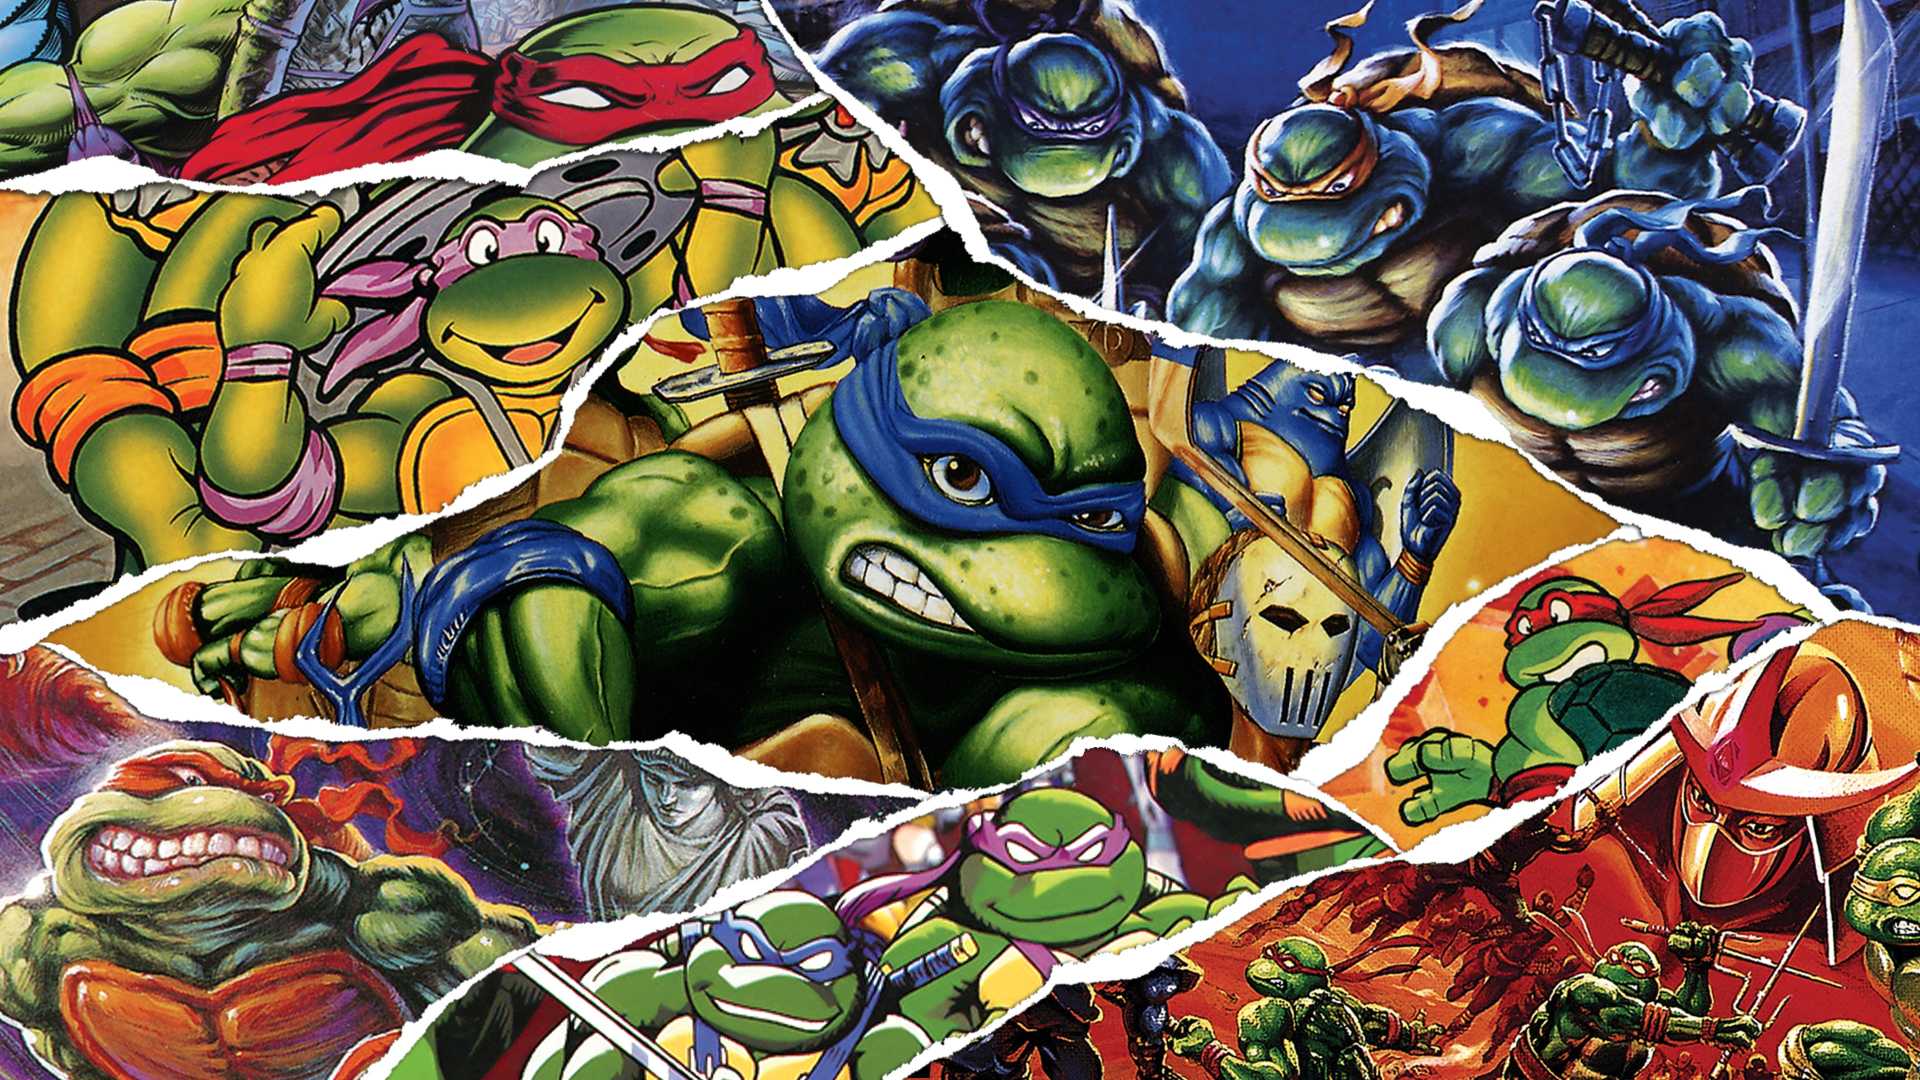 Teenage Mutant Ninja Turtles иксбокс. Черепашки ниндзя 2020. Шредер черепахи. Черепашки ниндзя Джоджо.